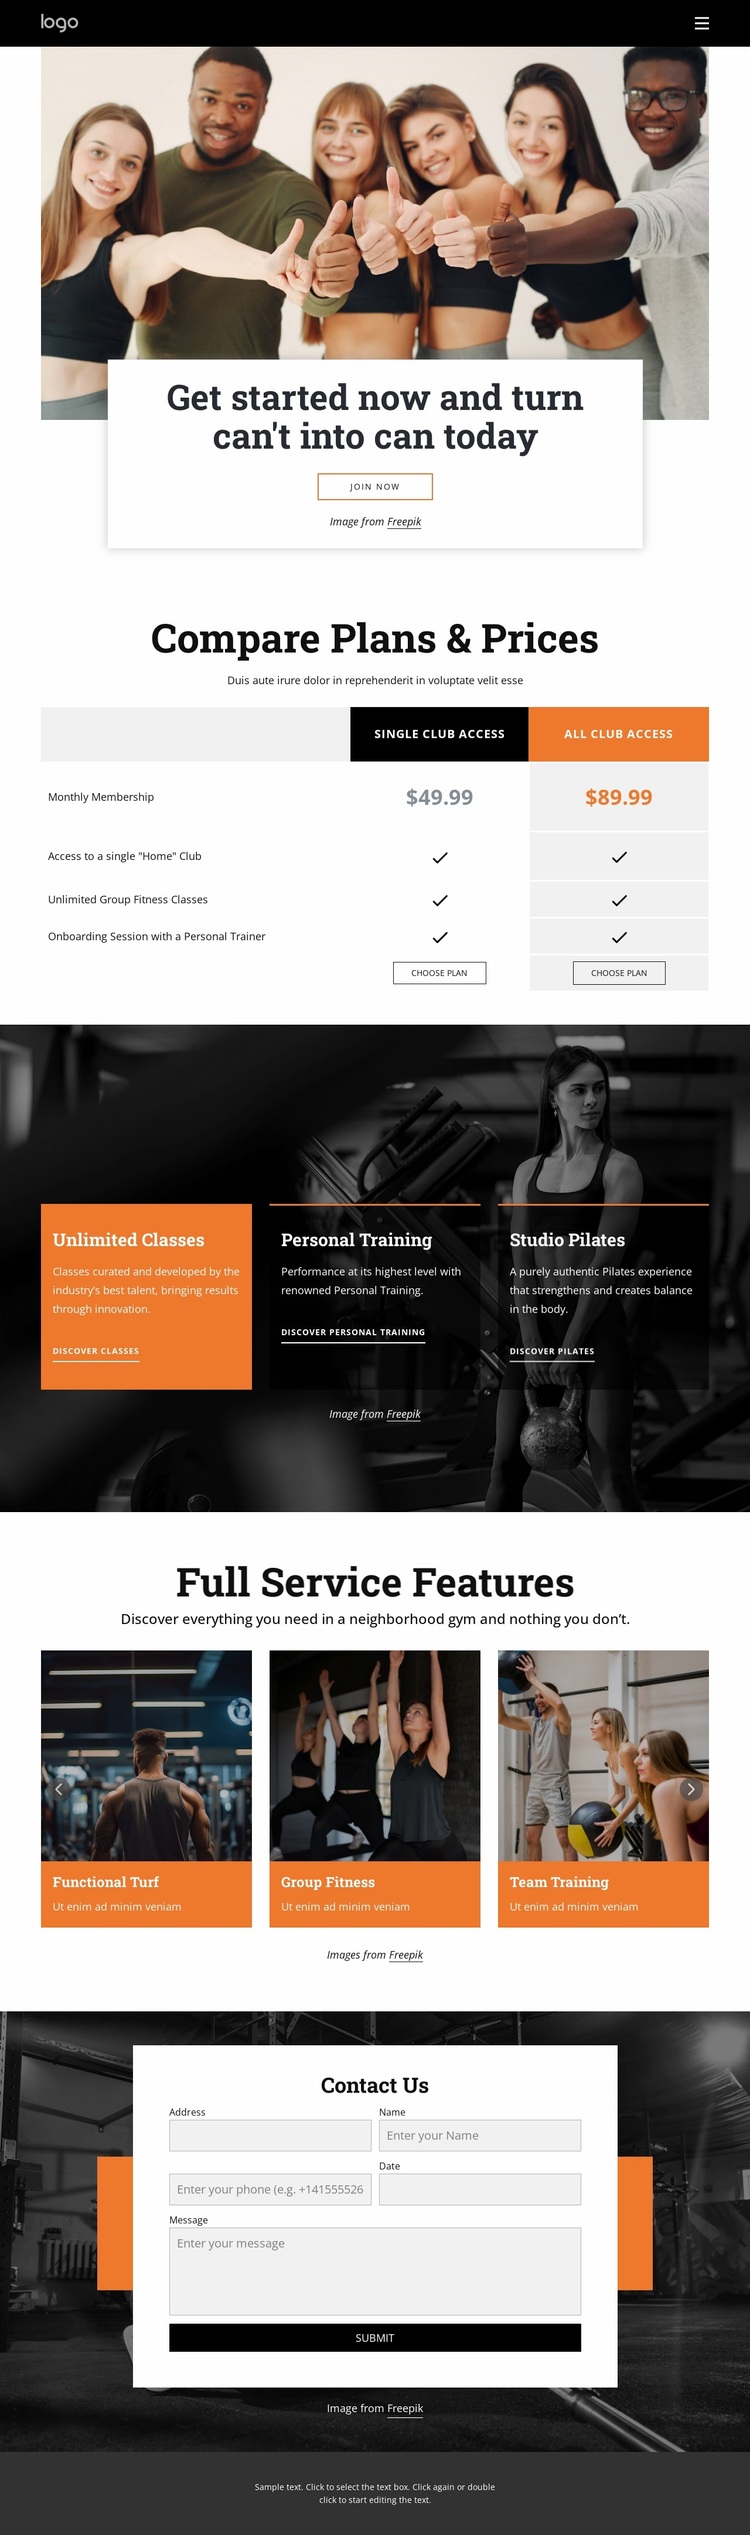 Exercise programs Website Design